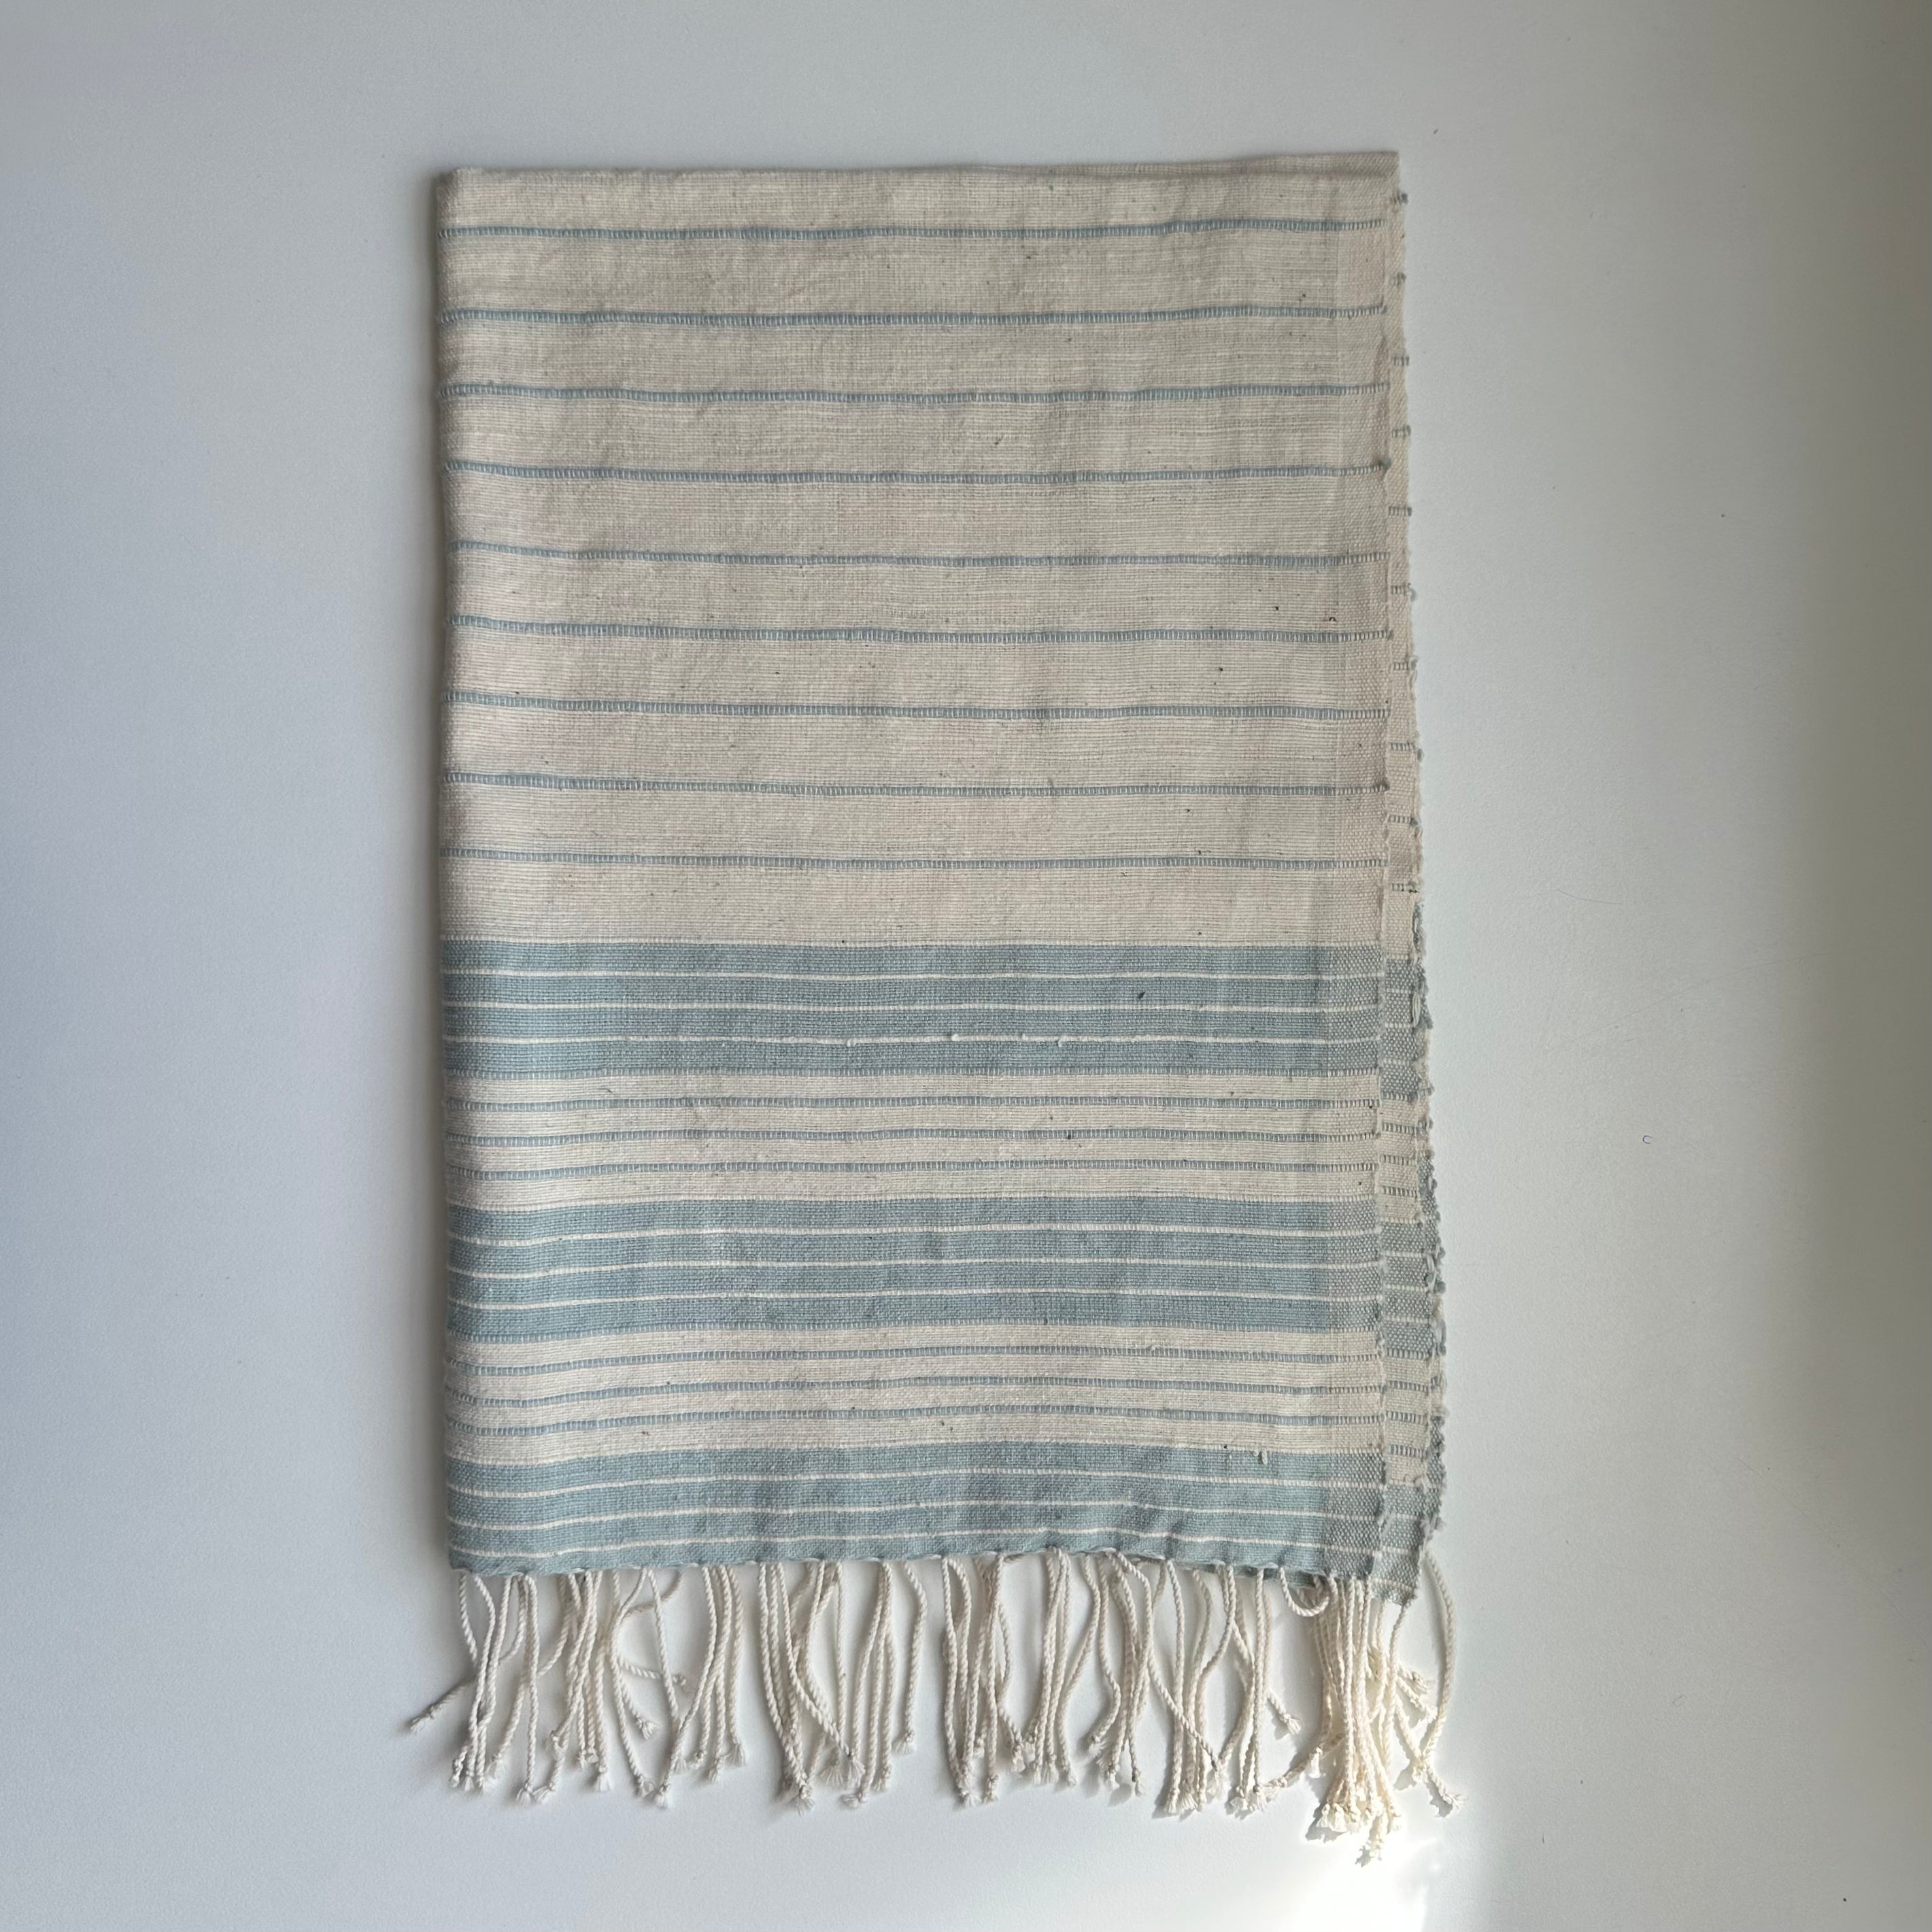 Sky blue colored hand spun Ethiopian cotton hand towel